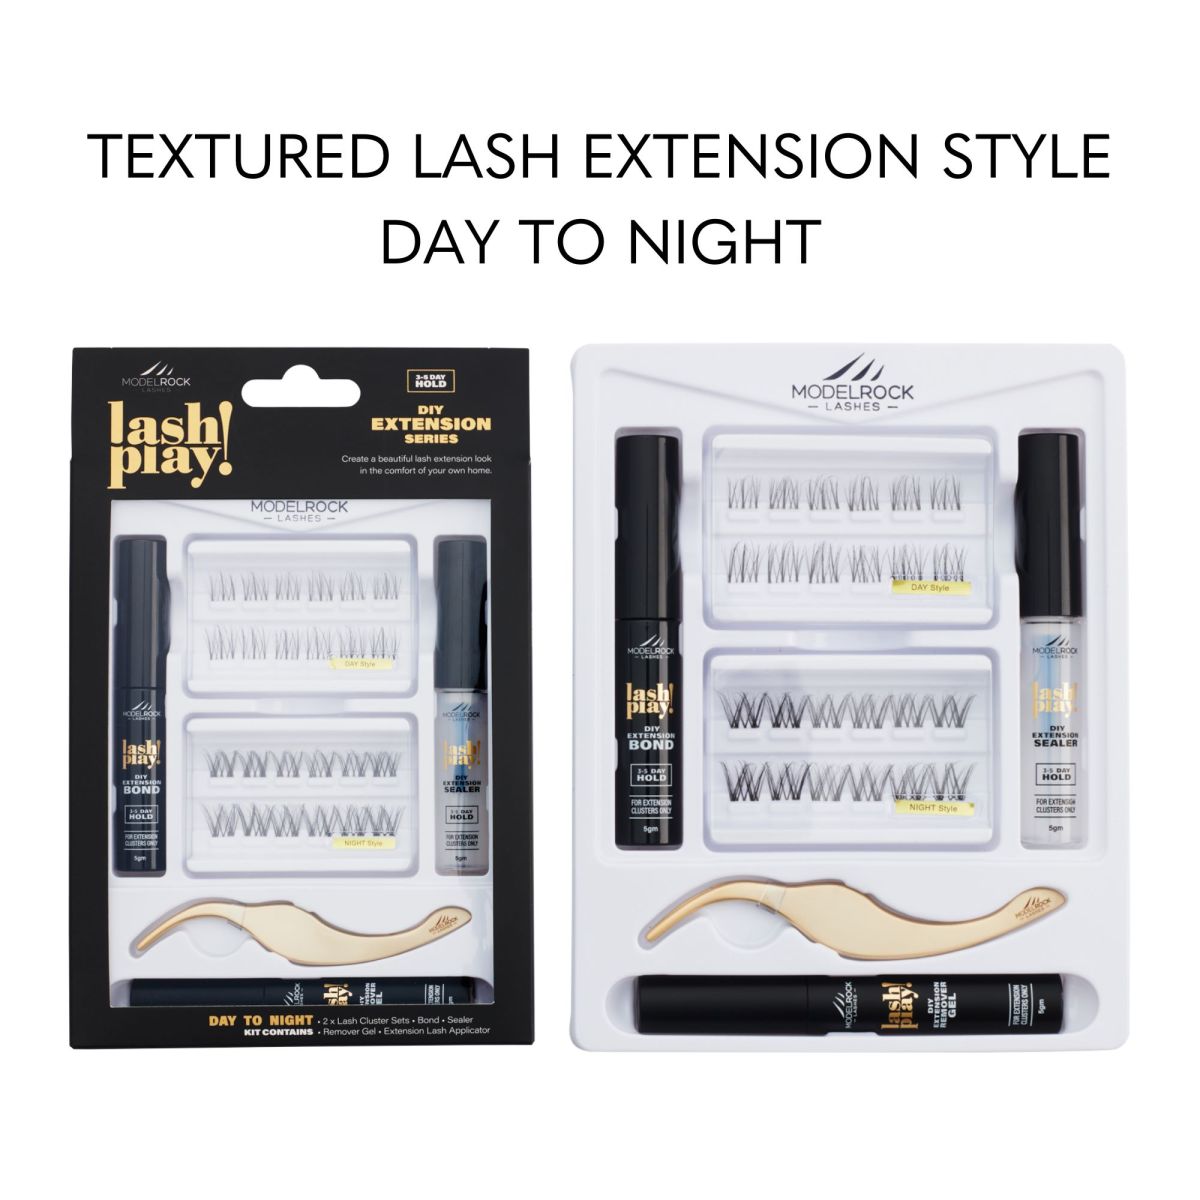 Textured lash extensions